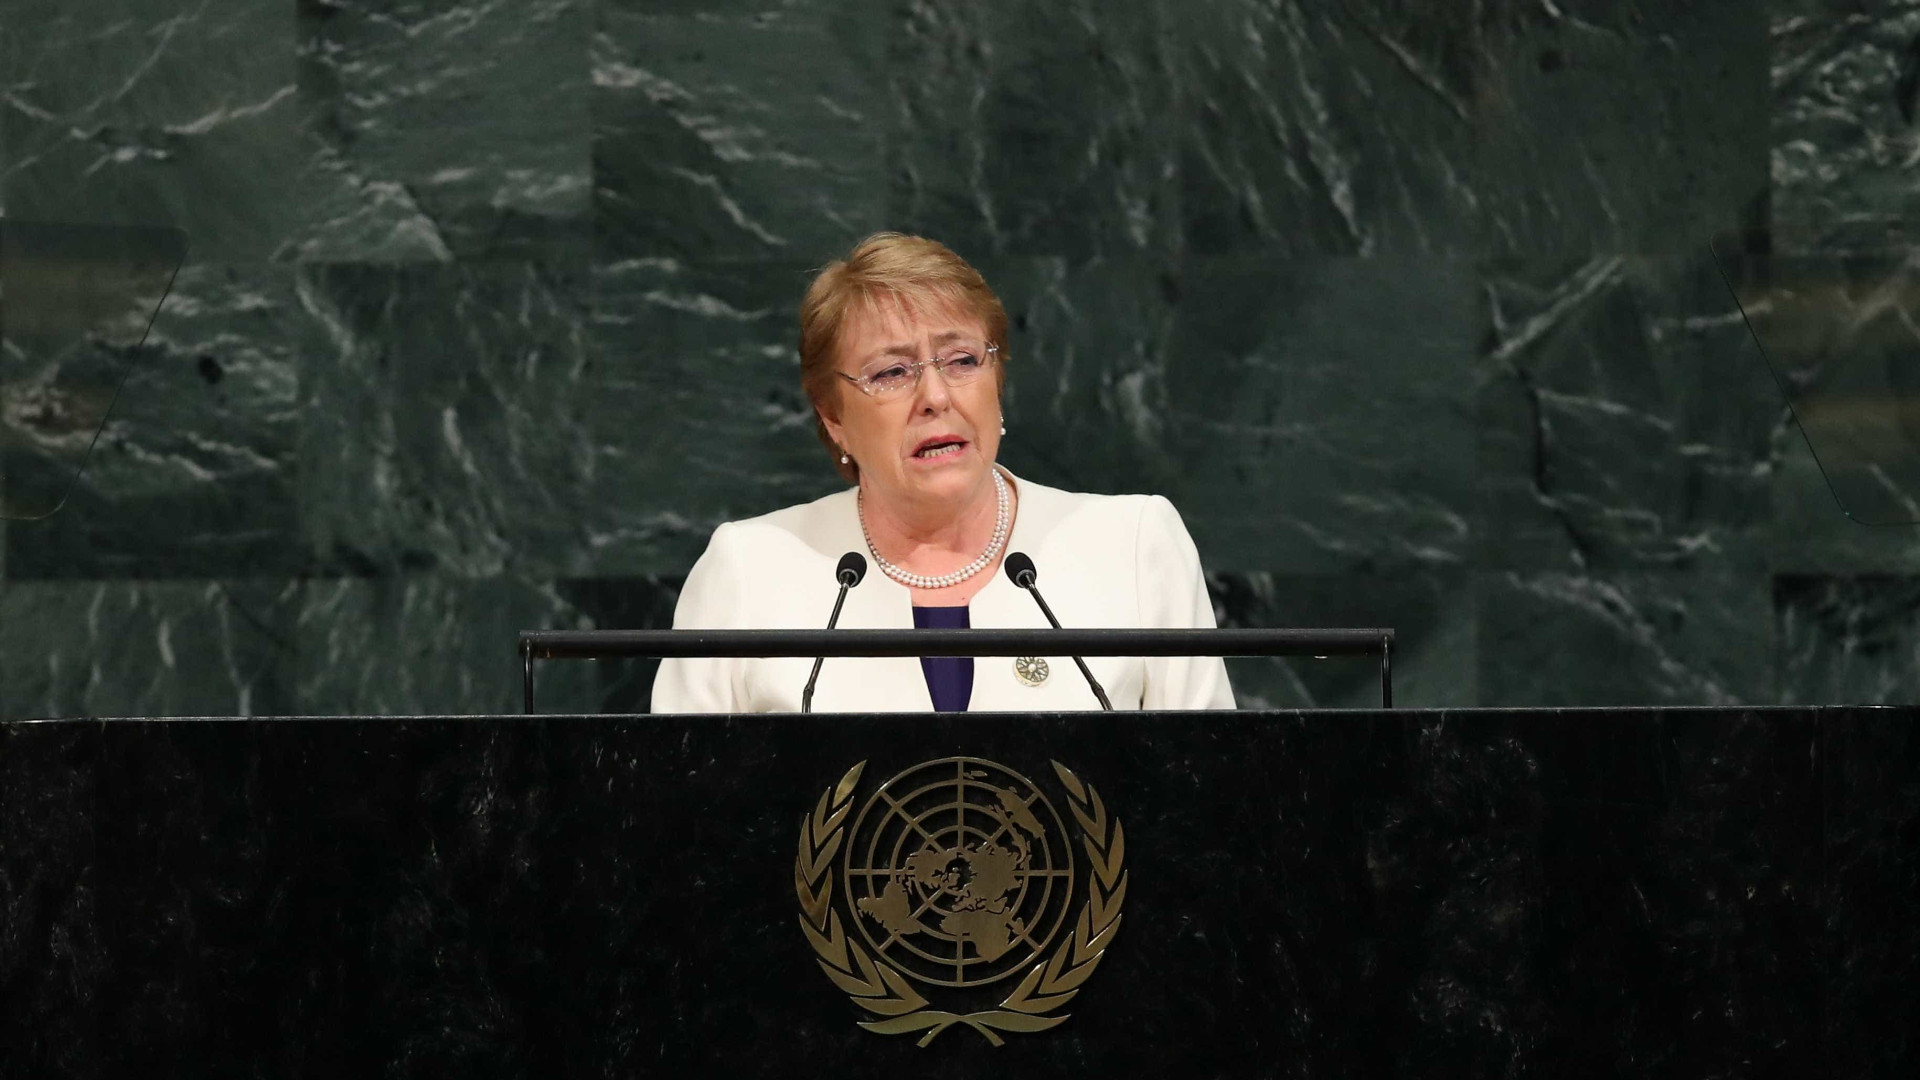 Ameaça nuclear pesa sobre toda a humanidade, diz Michelle Bachelet na ONU